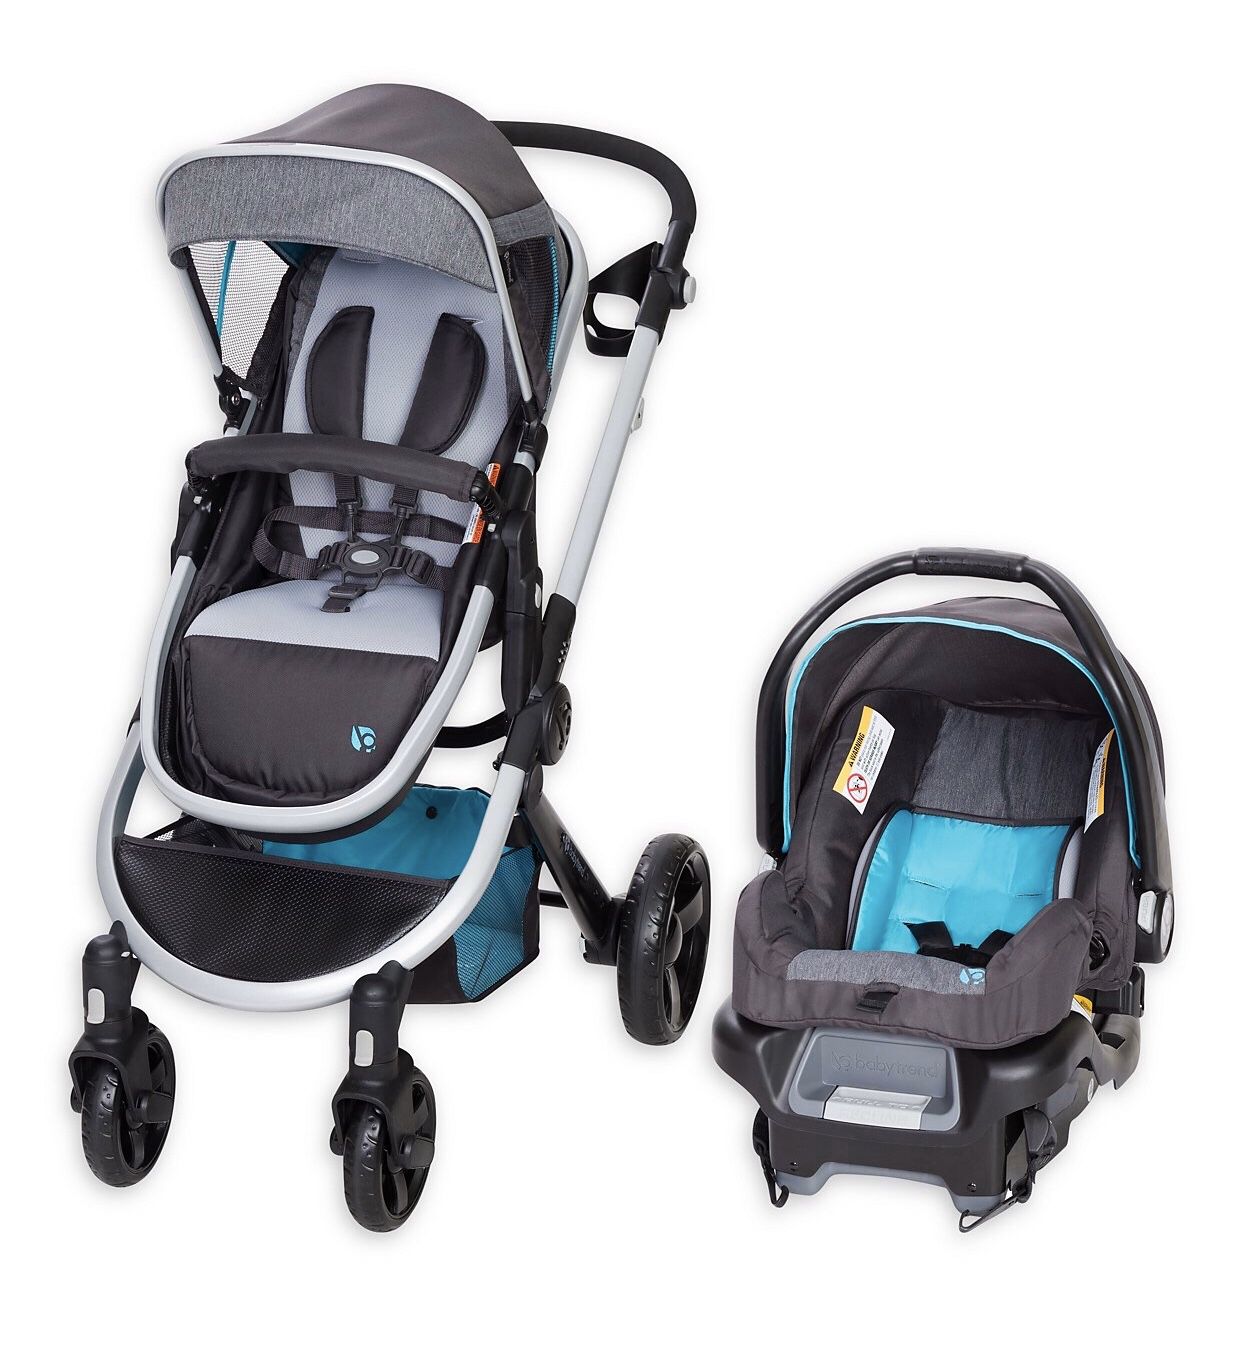 Baby trend stroller & car seat set